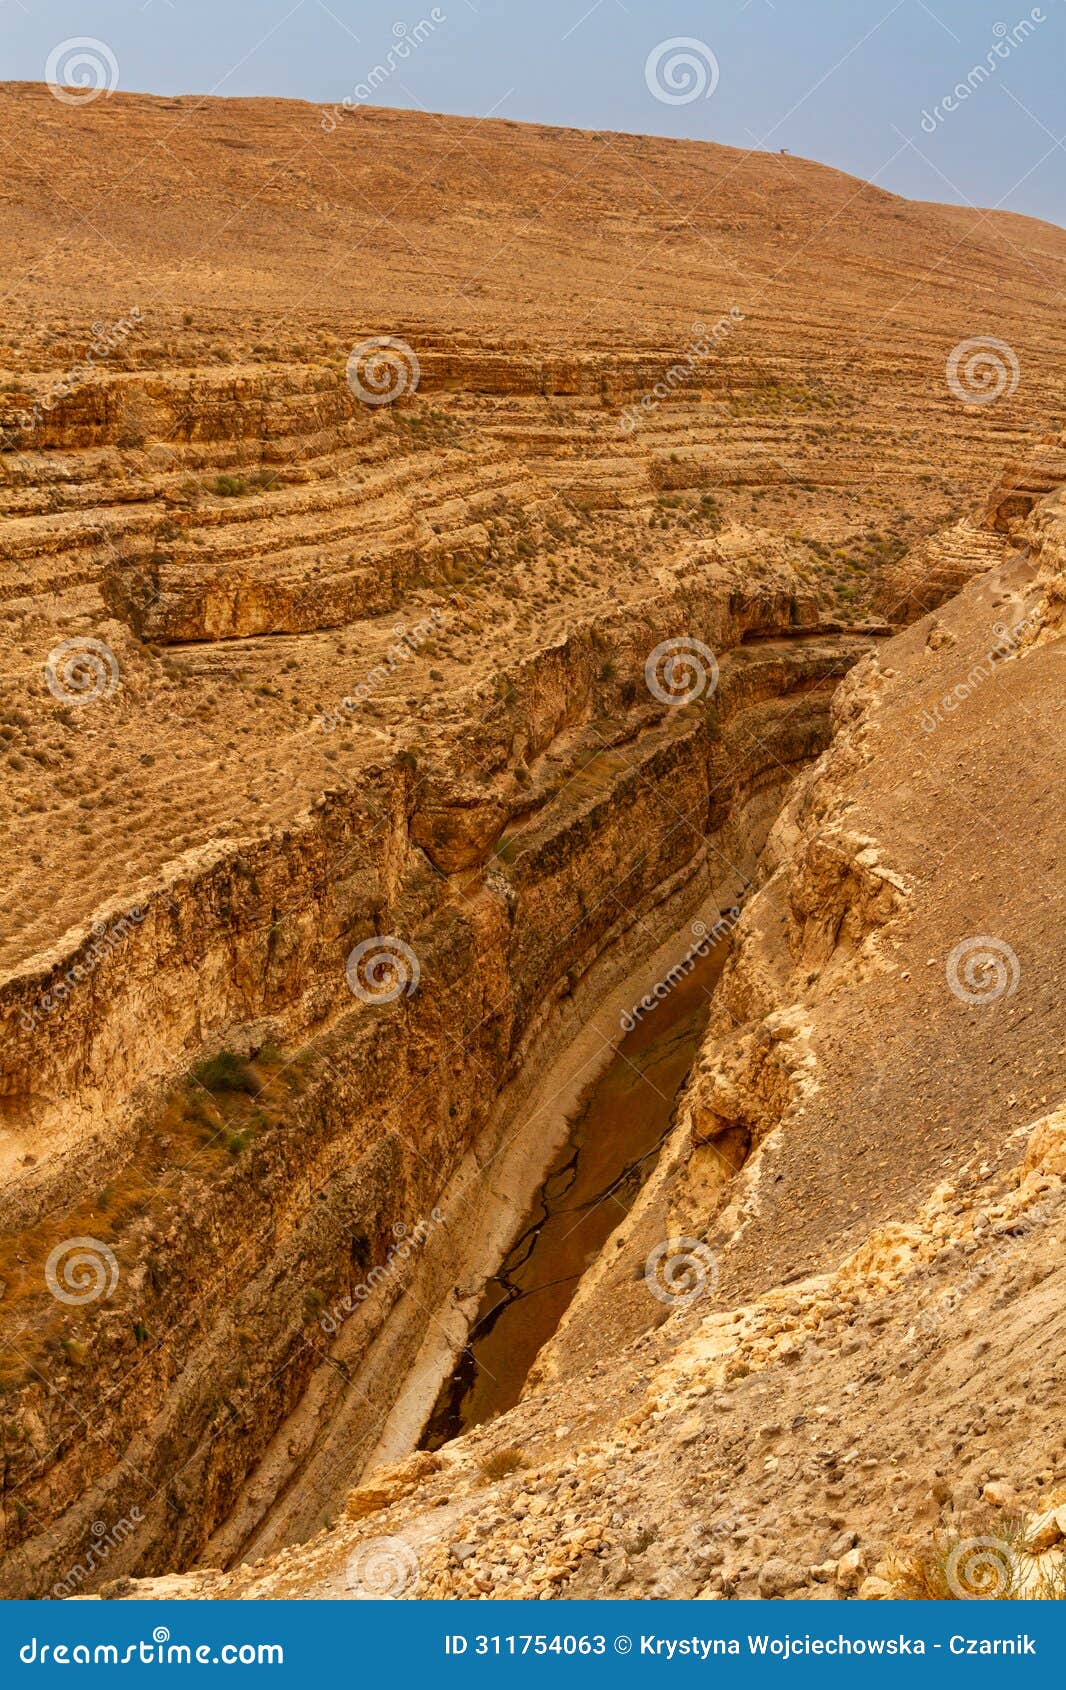 dry, desert canyon . mides, tunisia, africa